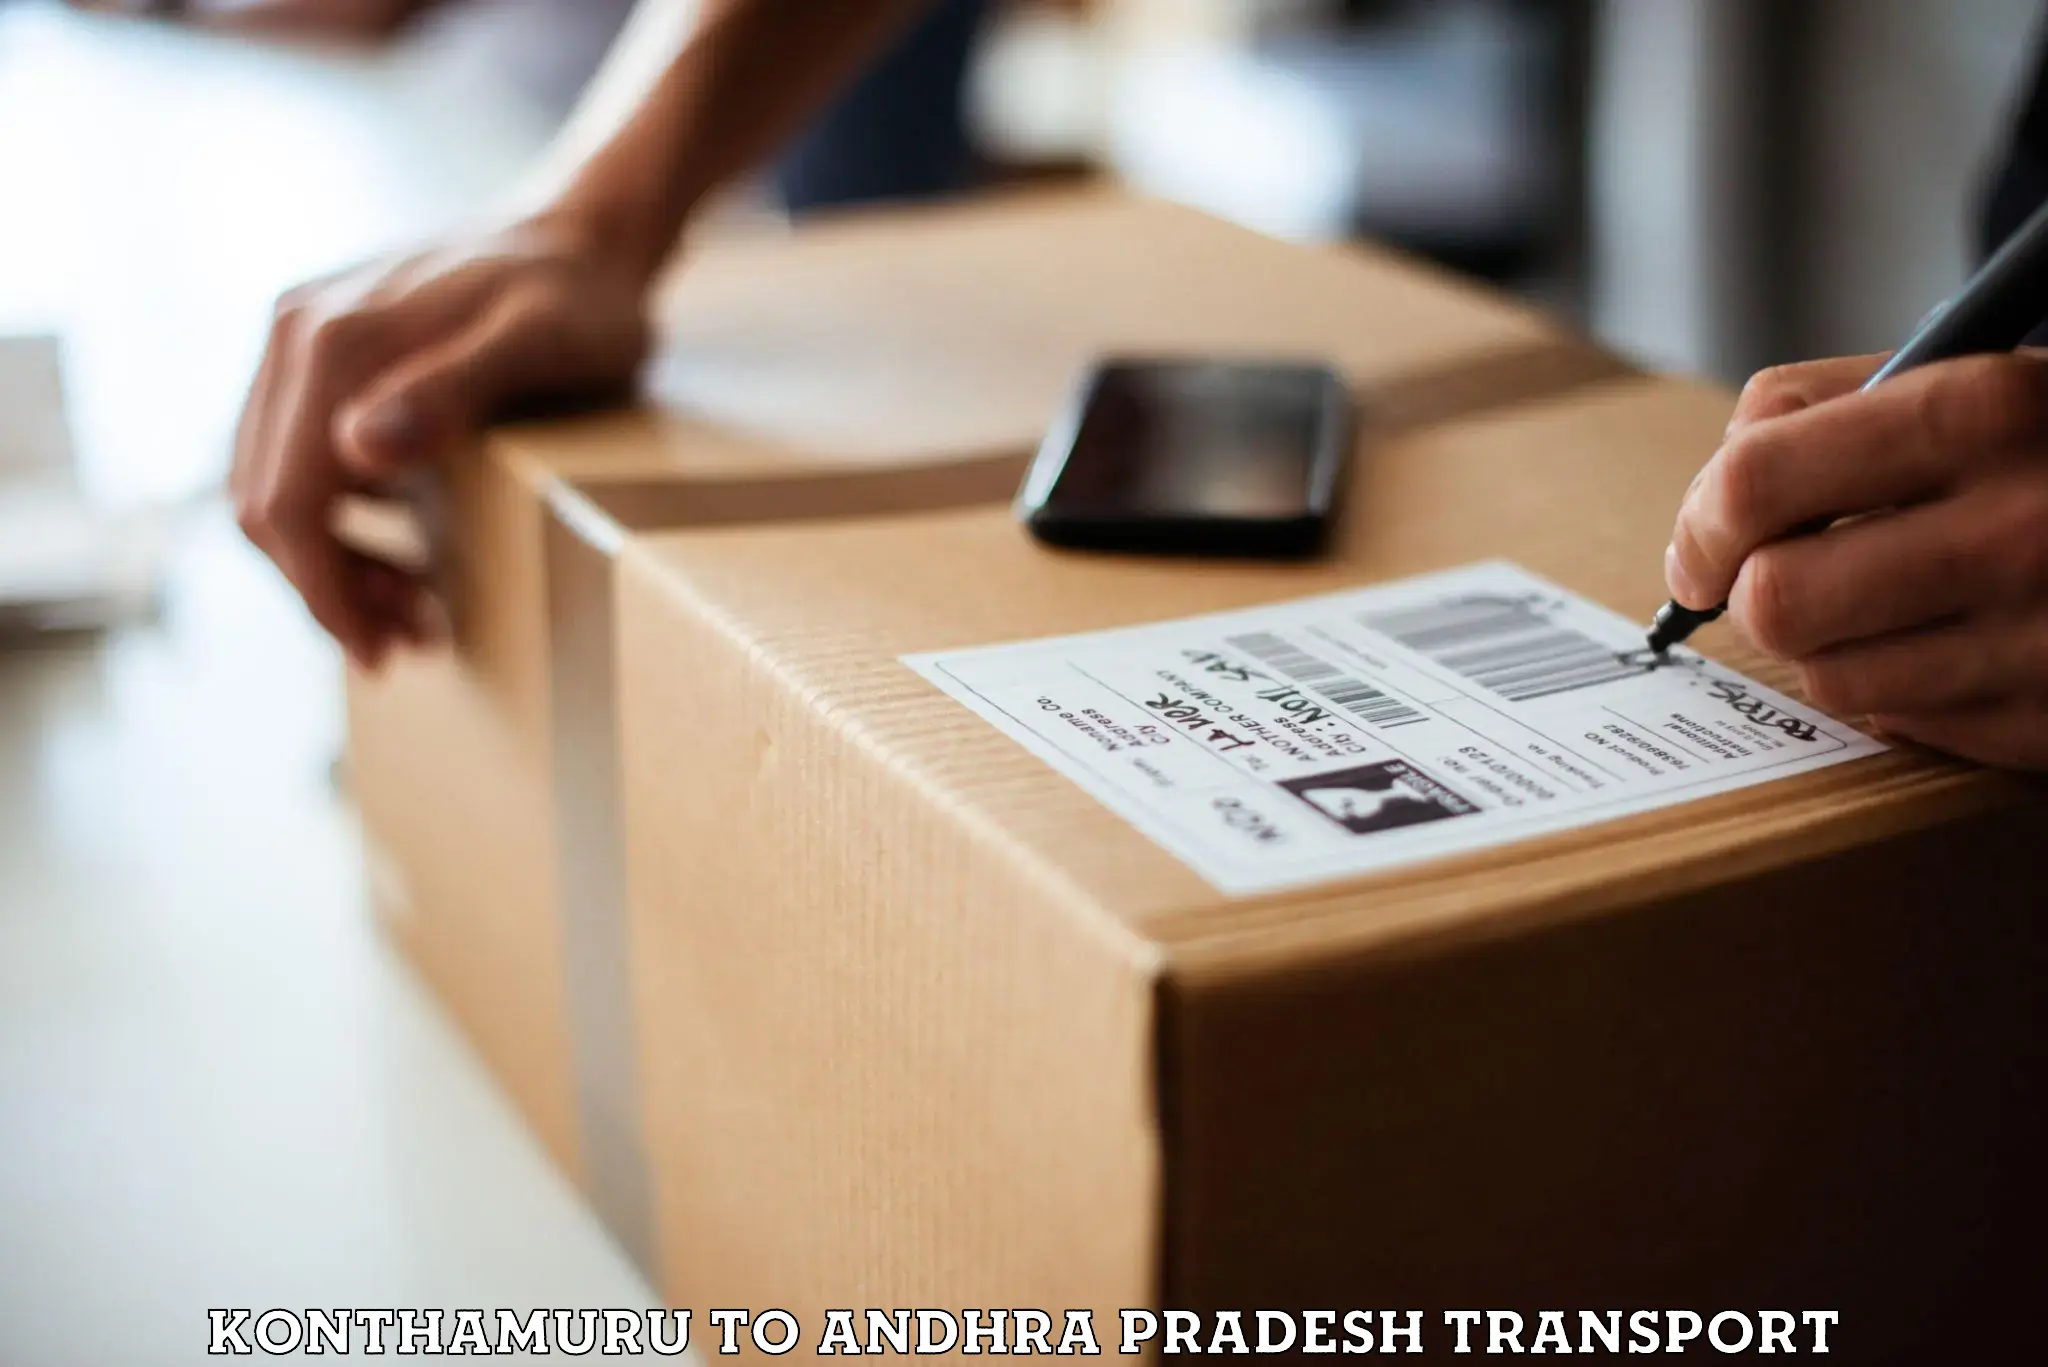 Daily parcel service transport Konthamuru to Tripuranthakam